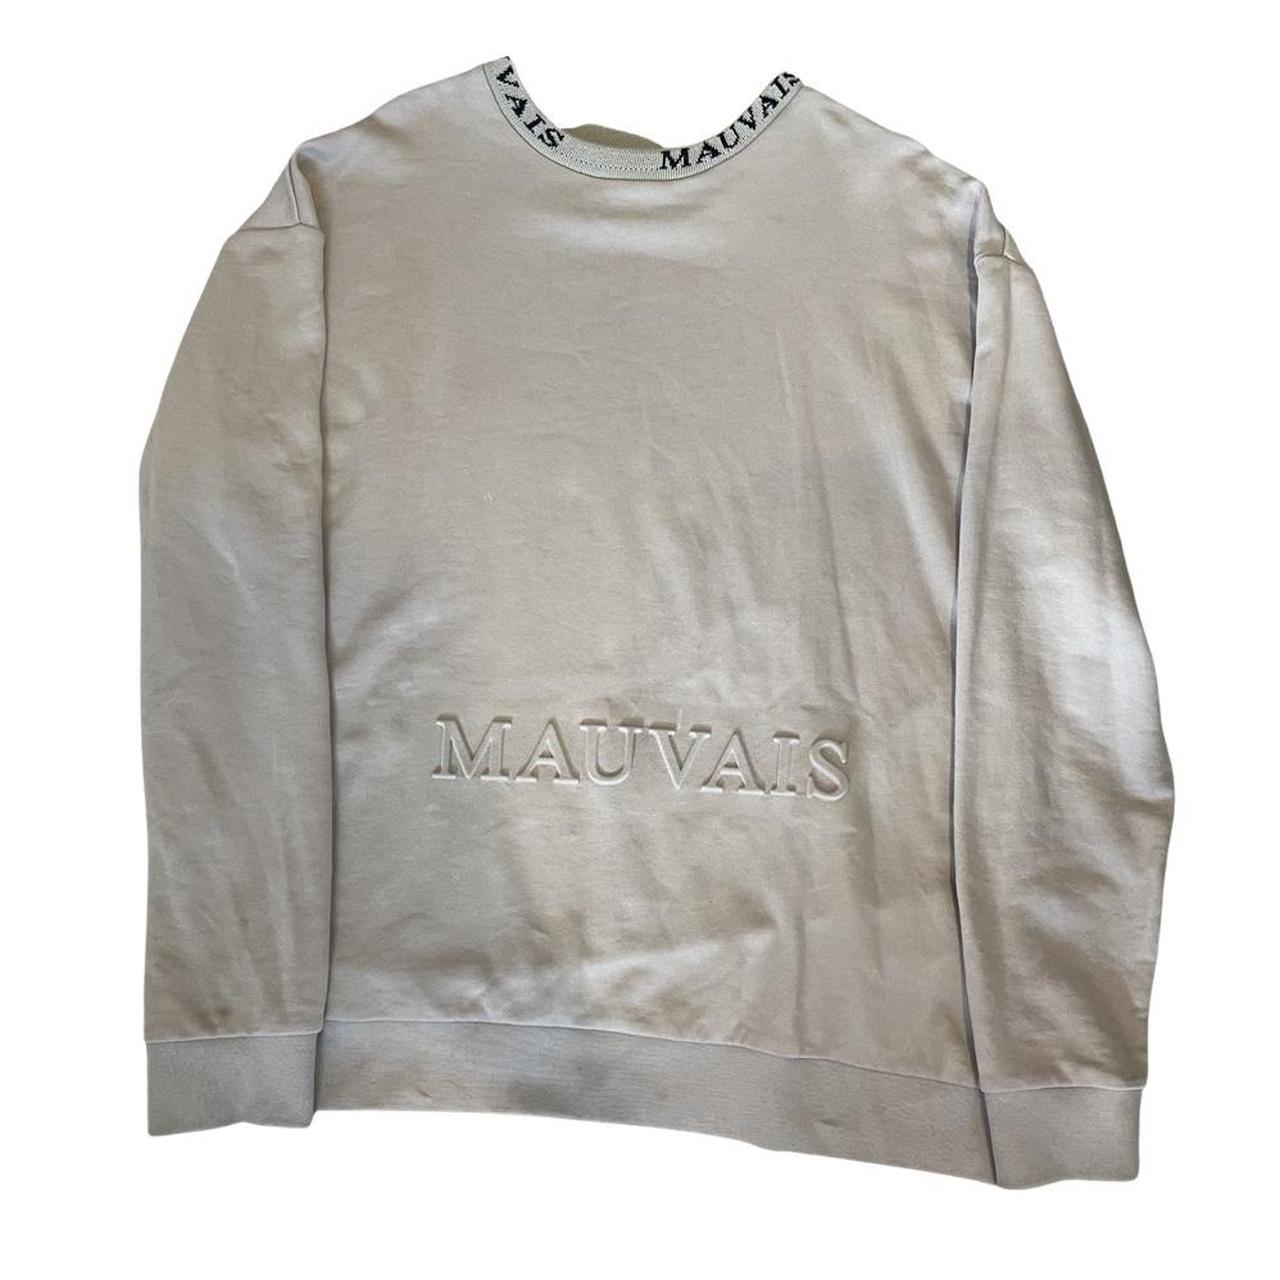 Product Image 1 - Tan long sleeve shirt/sweater. Has